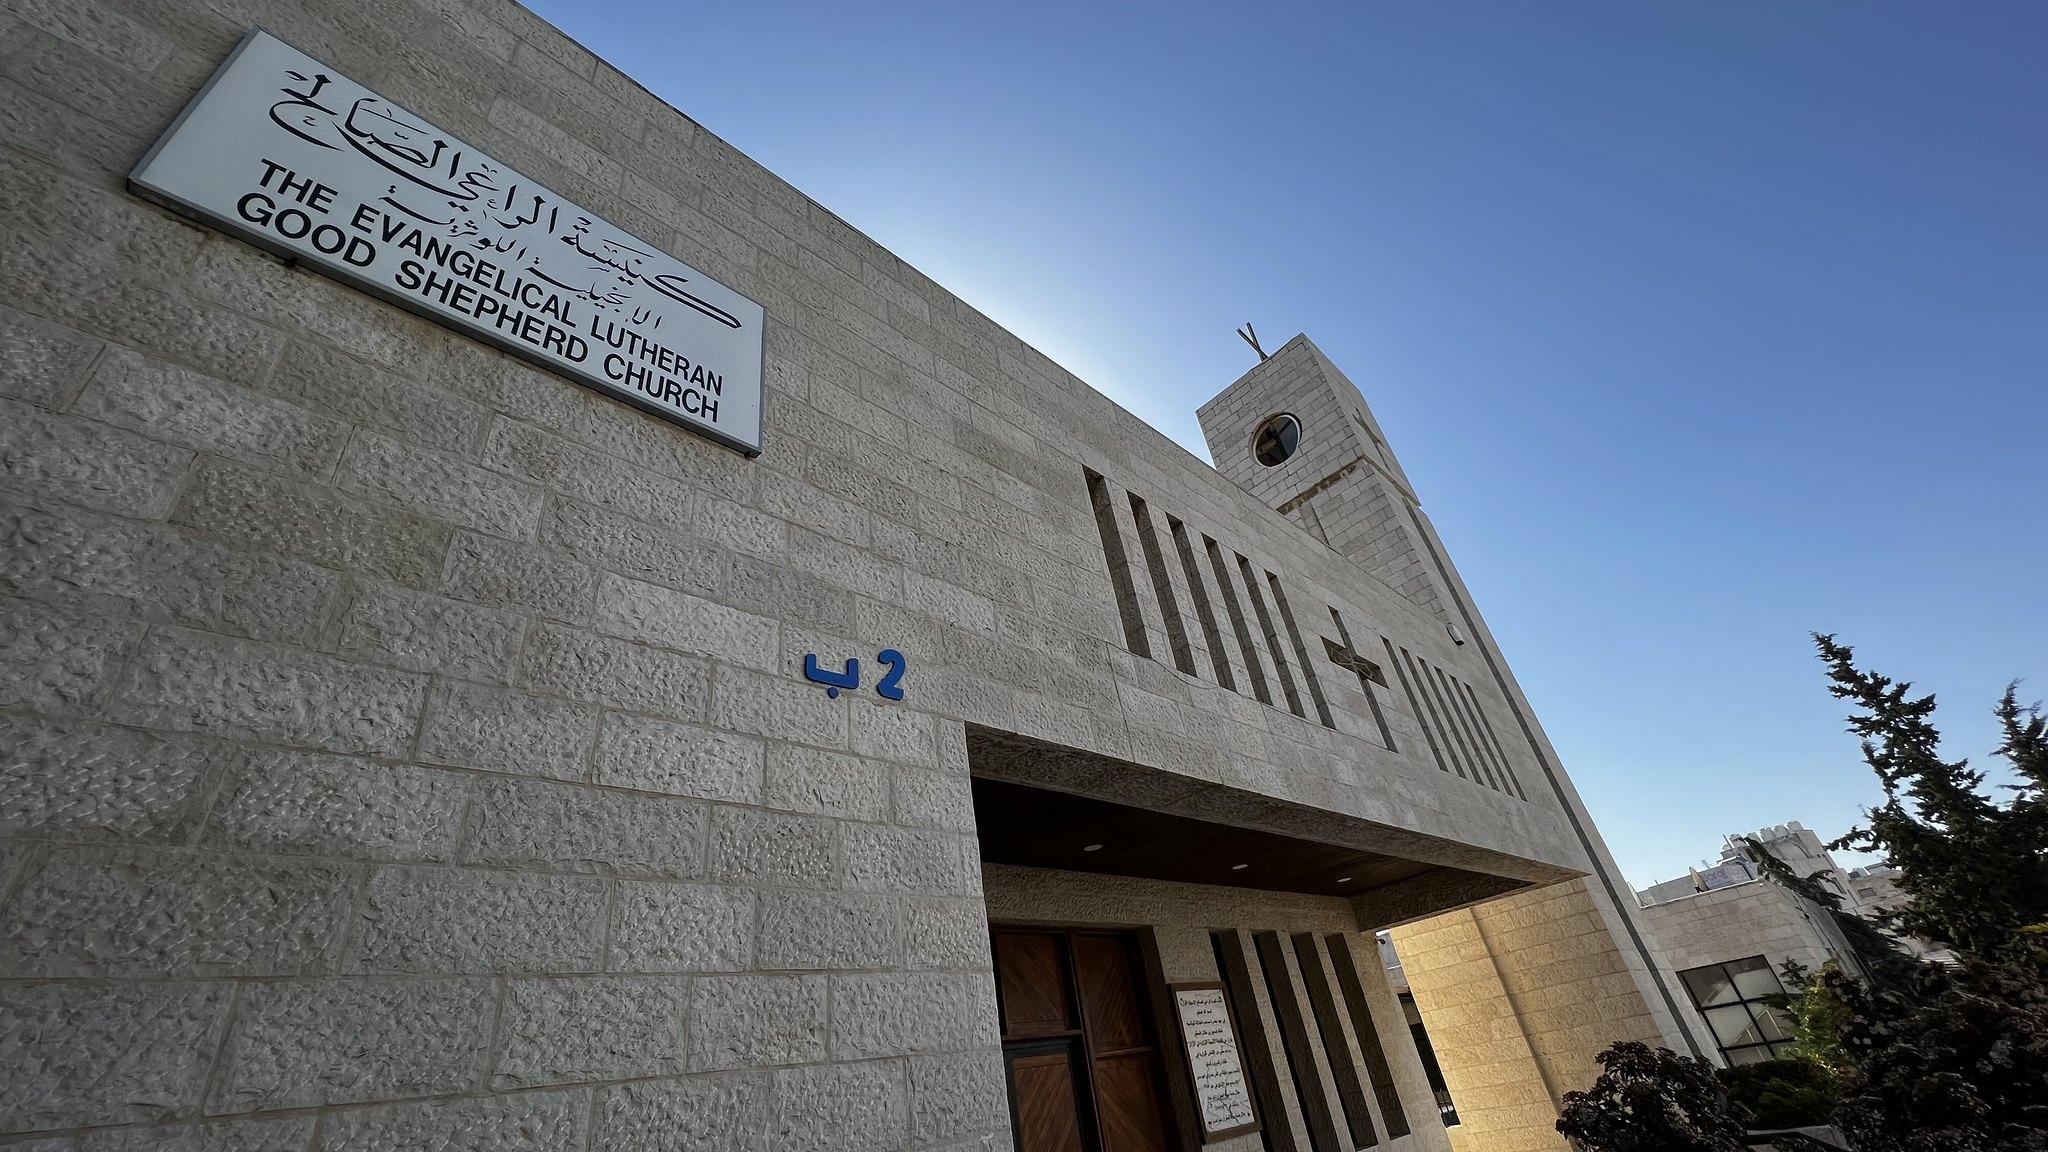 The Evangelical Lutheran Good Shepherd Church in Jordan